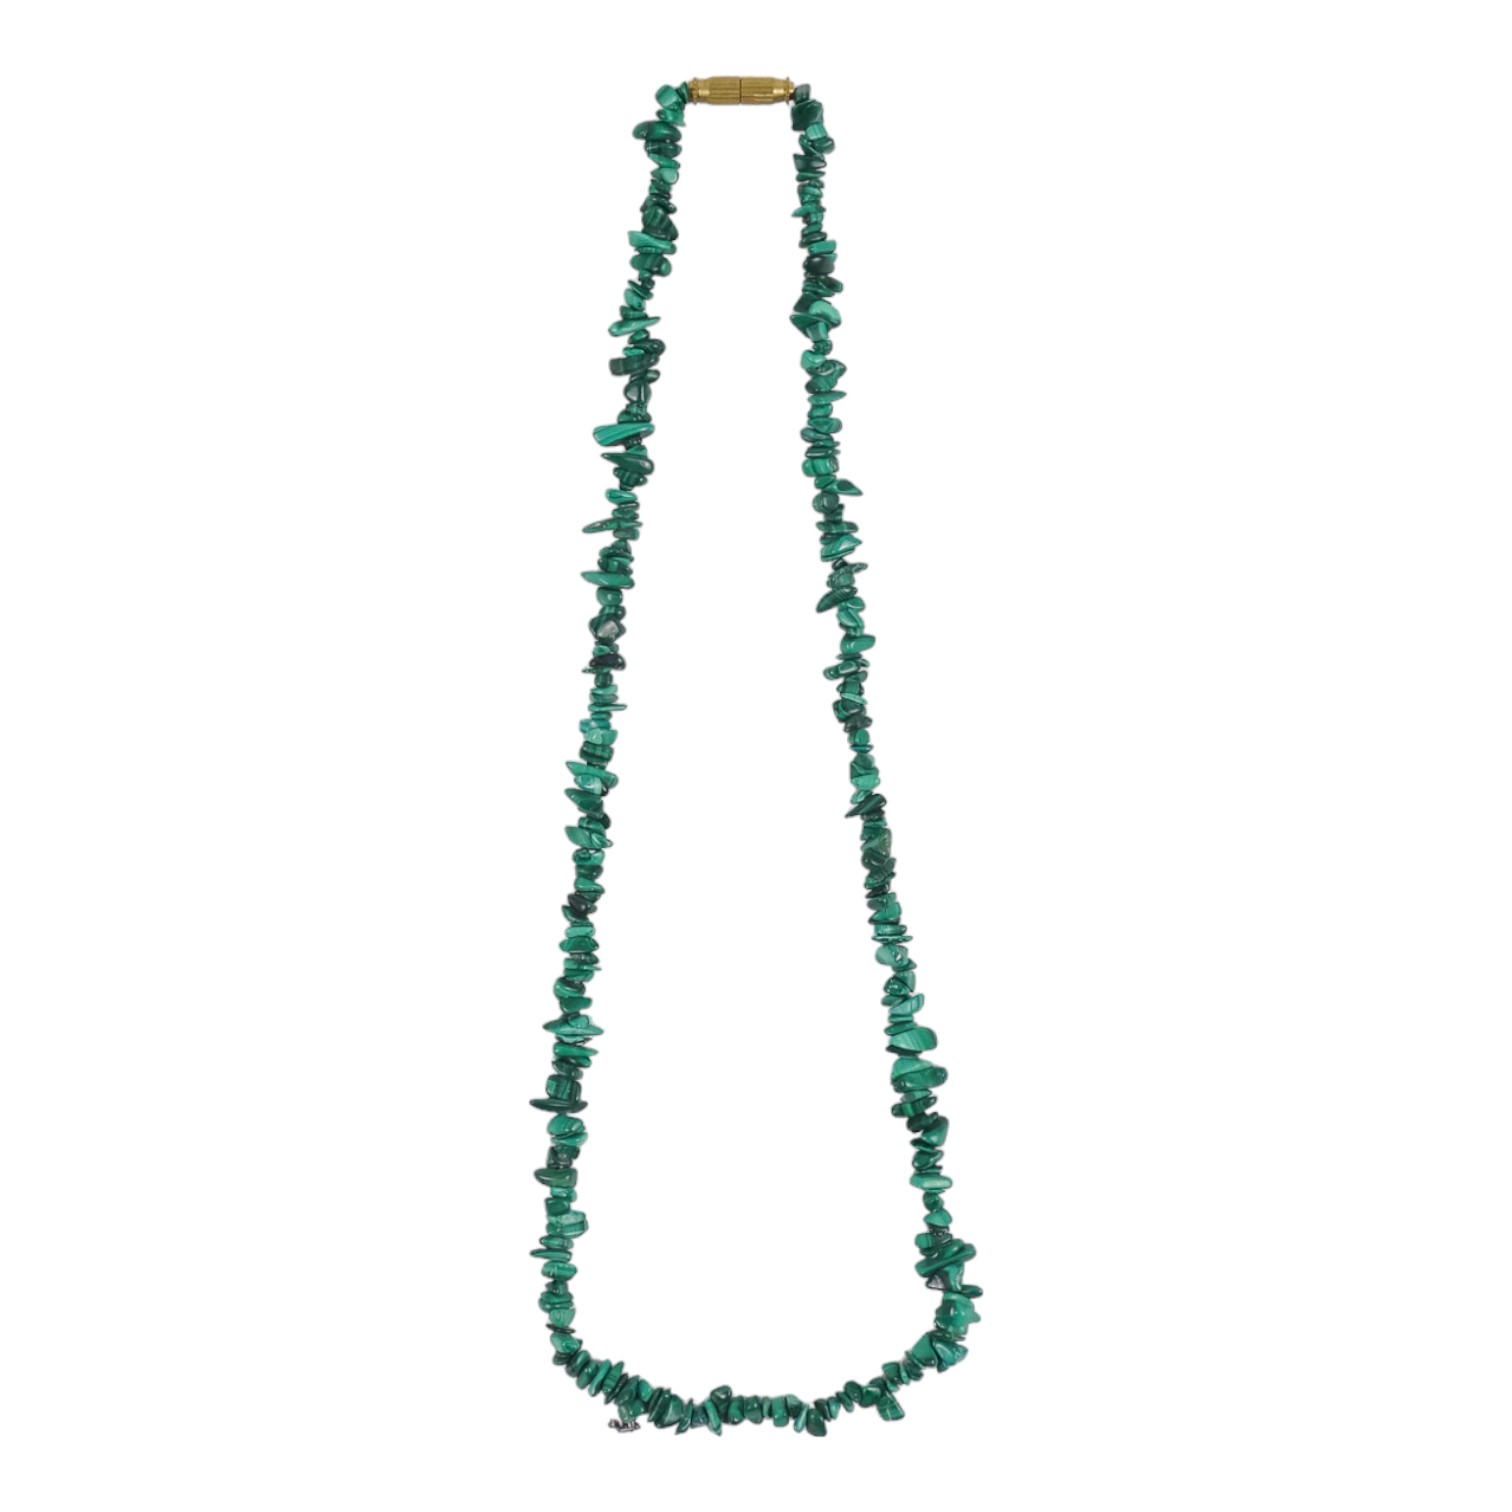 A jadeite necklace.